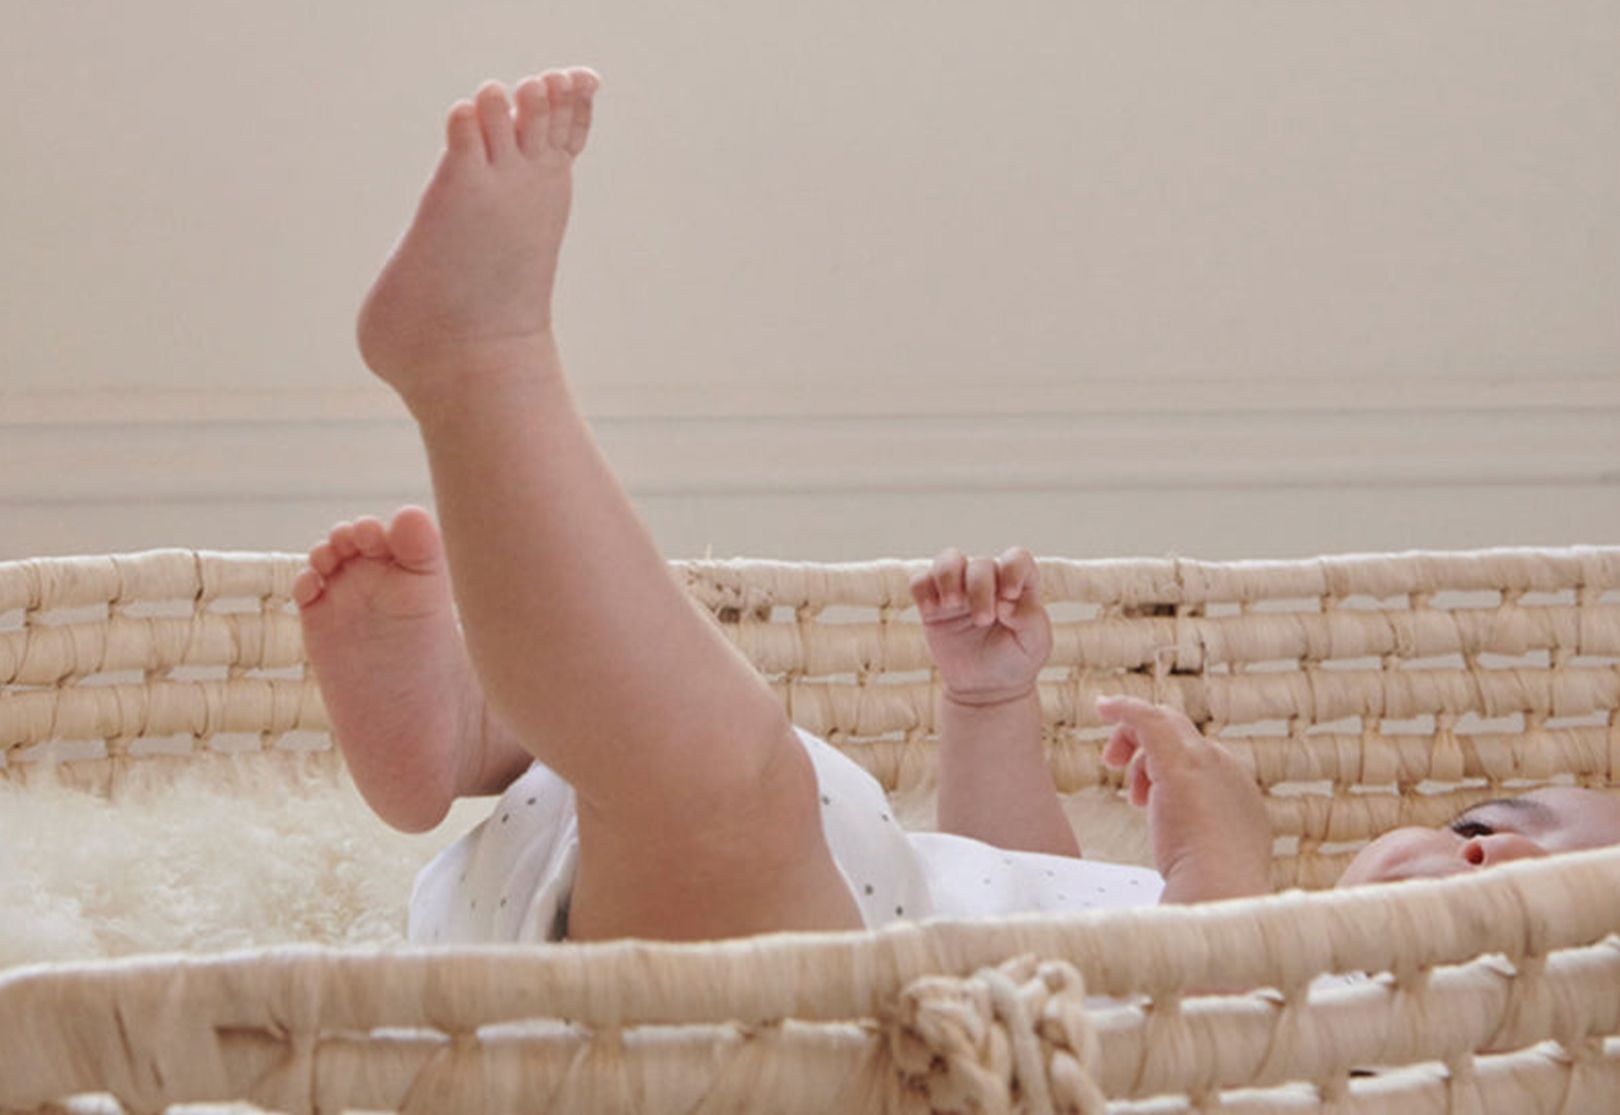 Baby Overnight Bag Checklist - Baby Packing List - Purebaby - Purebaby